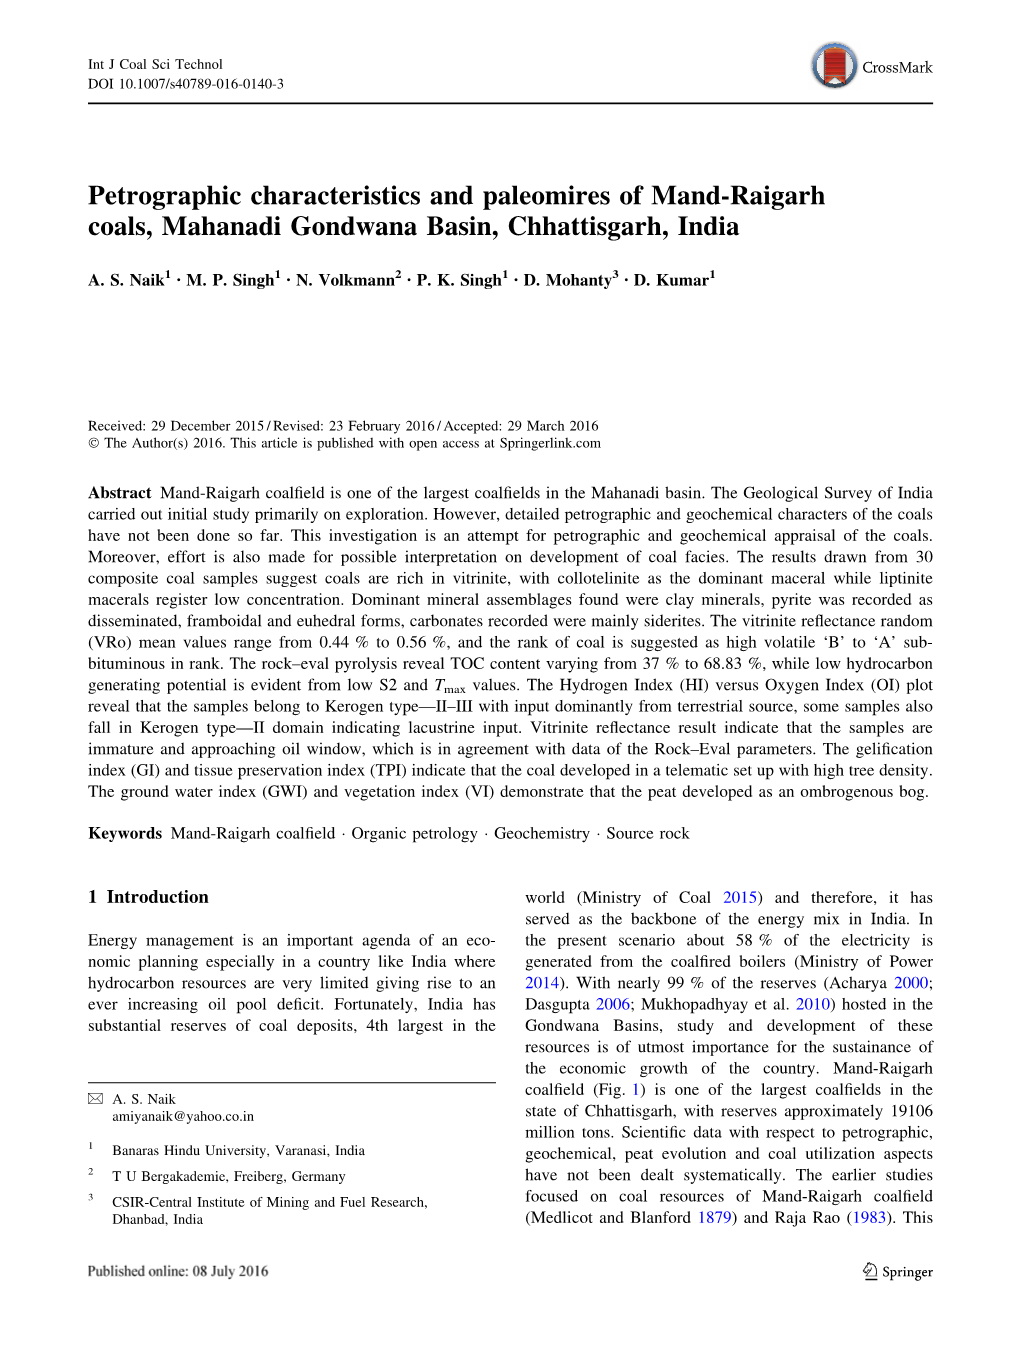 Petrographic Characteristics and Paleomires of Mand-Raigarh Coals, Mahanadi Gondwana Basin, Chhattisgarh, India